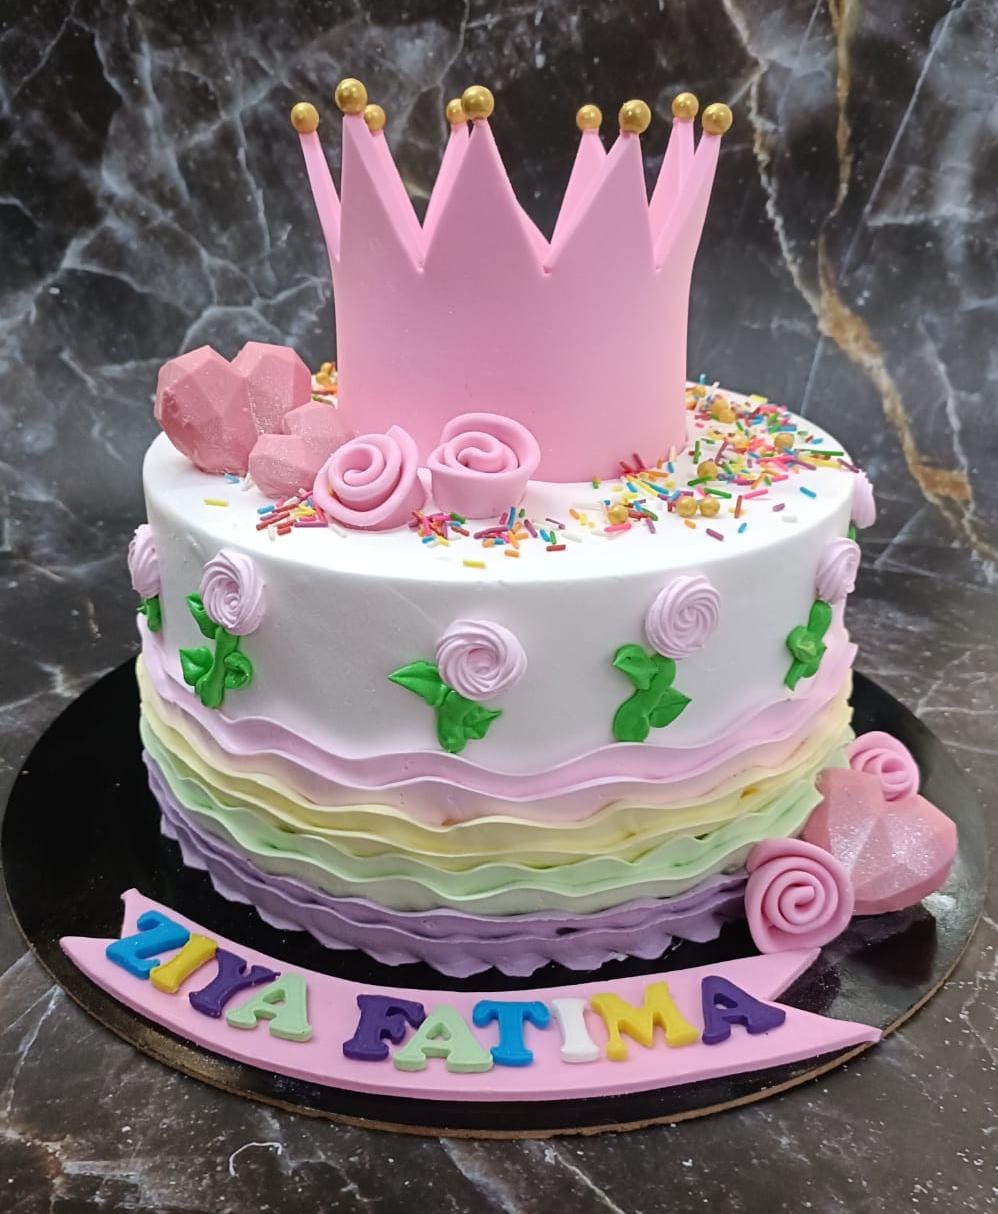 Crown customize cake